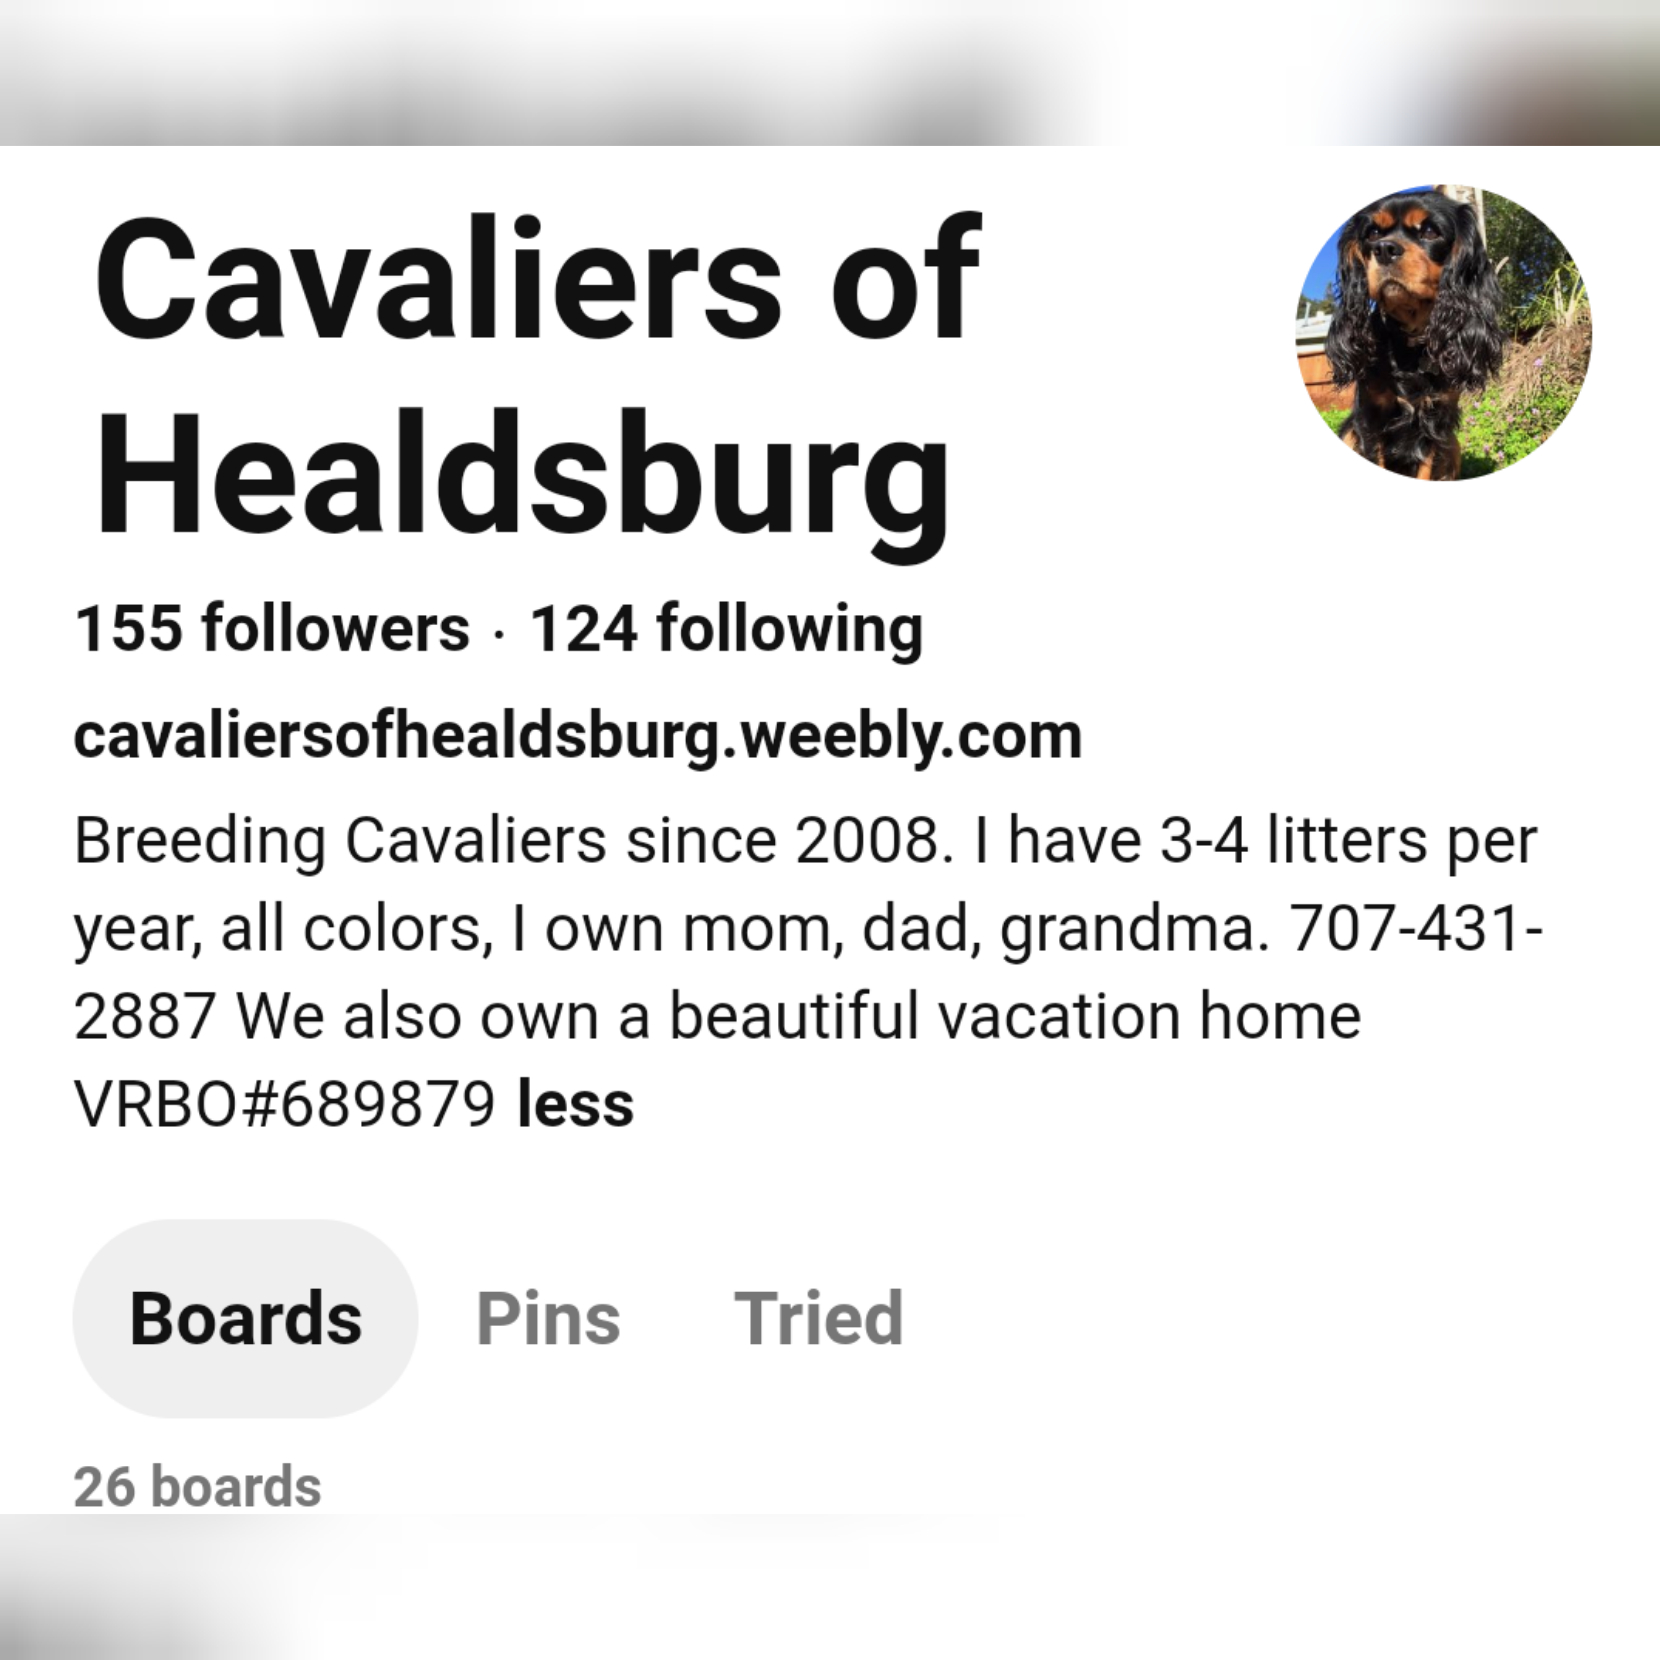 Cavaliers of Healdsburg